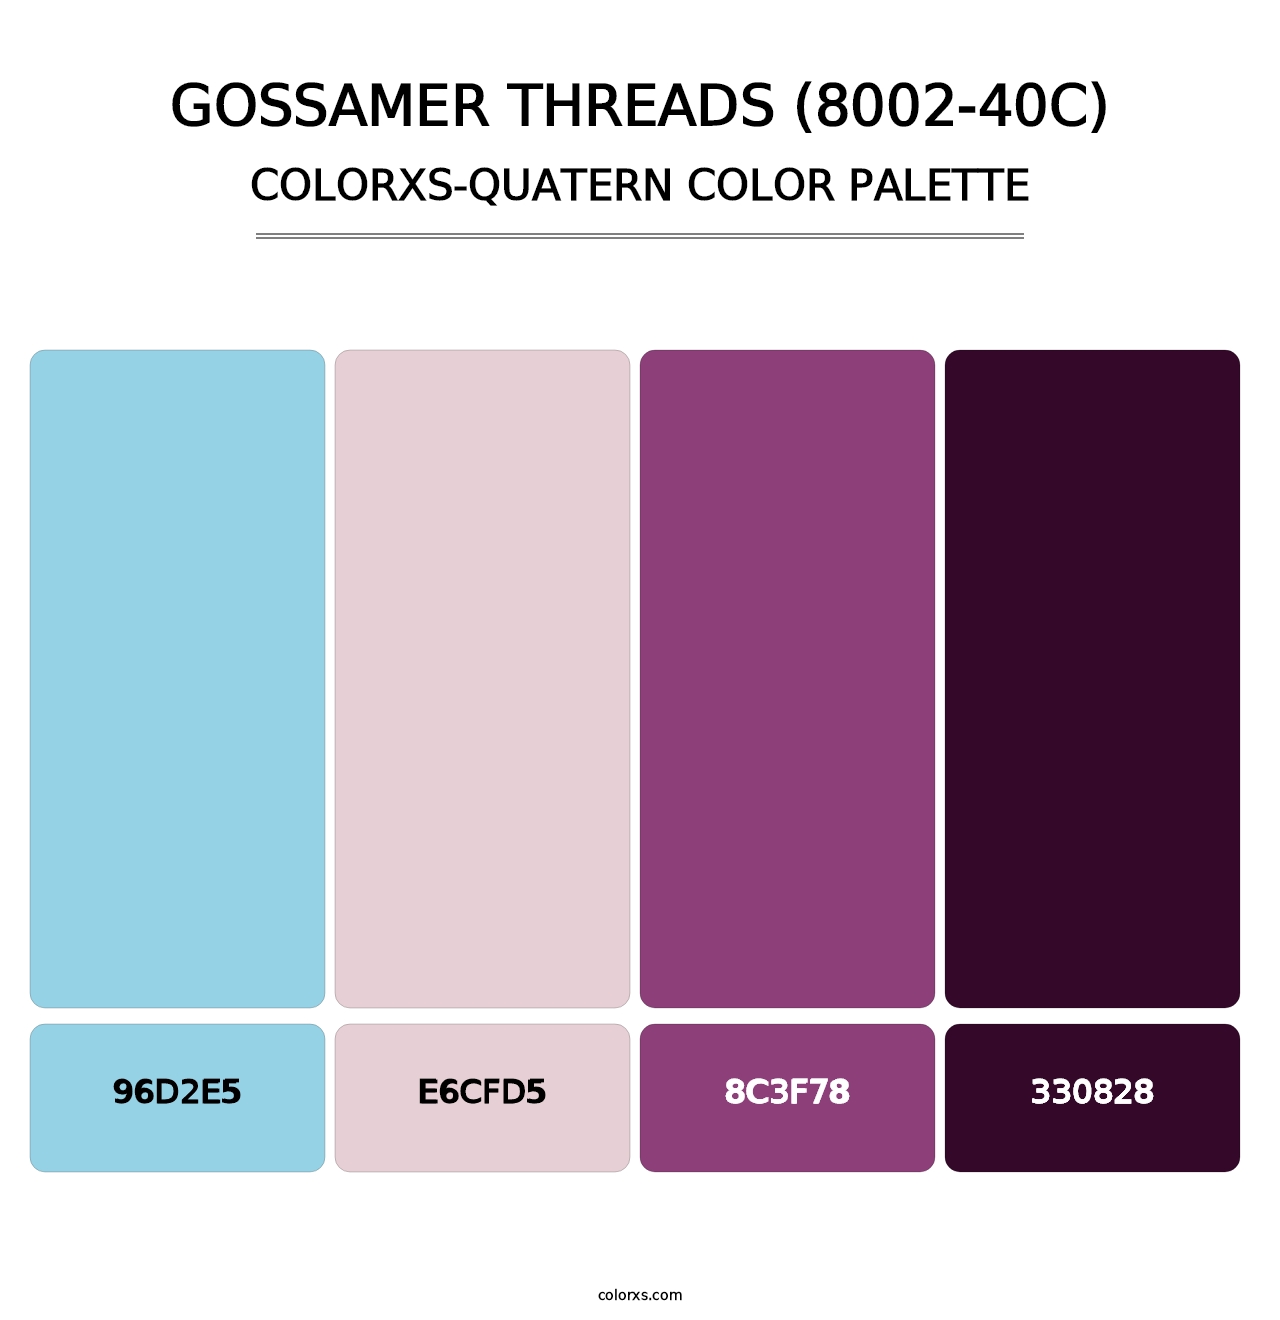 Gossamer Threads (8002-40C) - Colorxs Quatern Palette